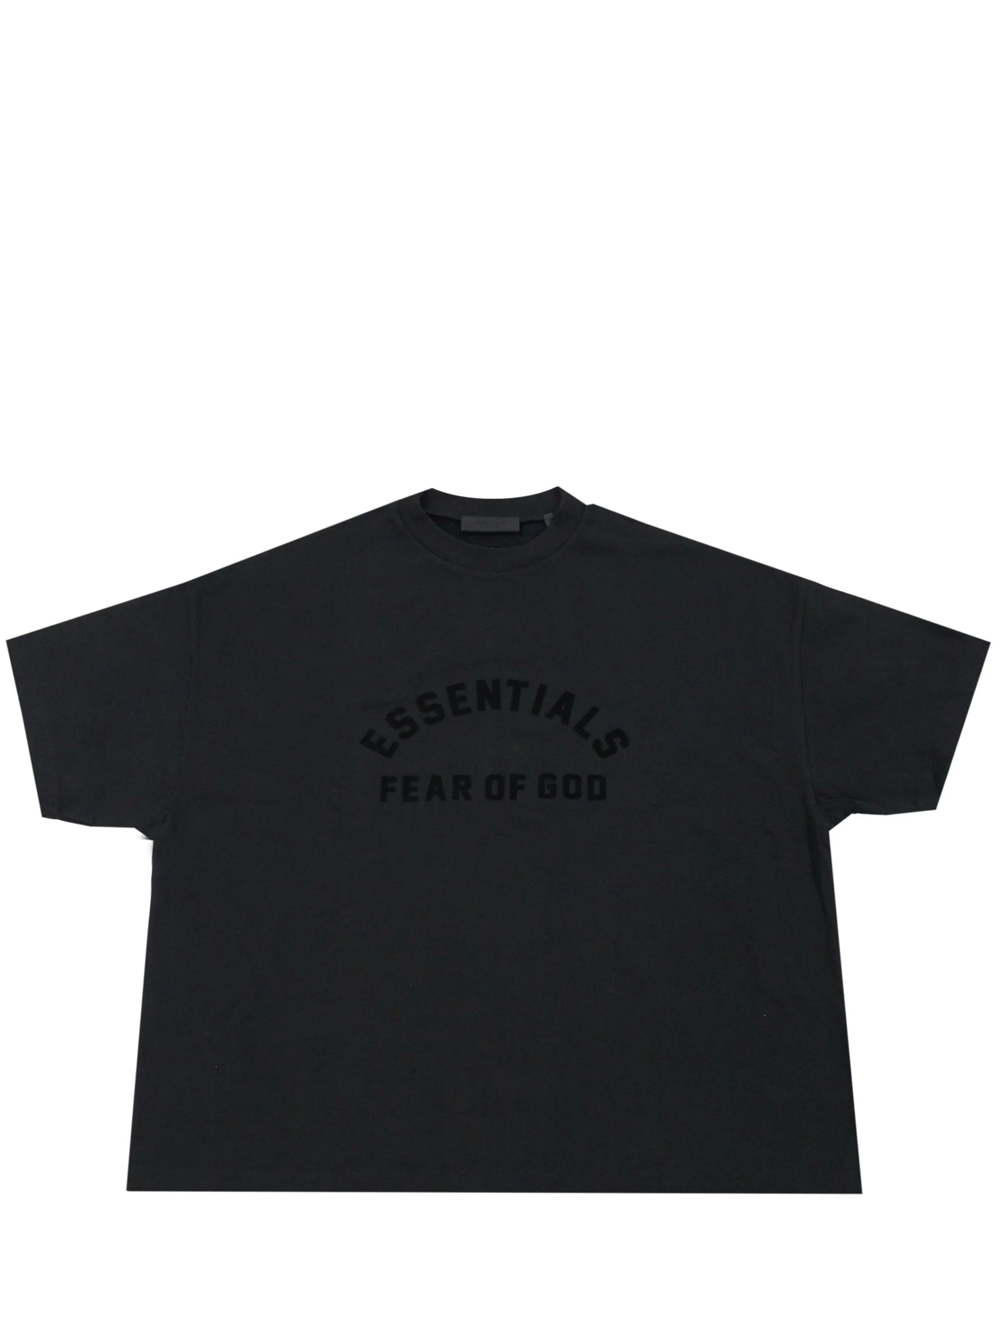 FEAR_OF_GOD_ESSENTIALS_Essentials_Tee-Black